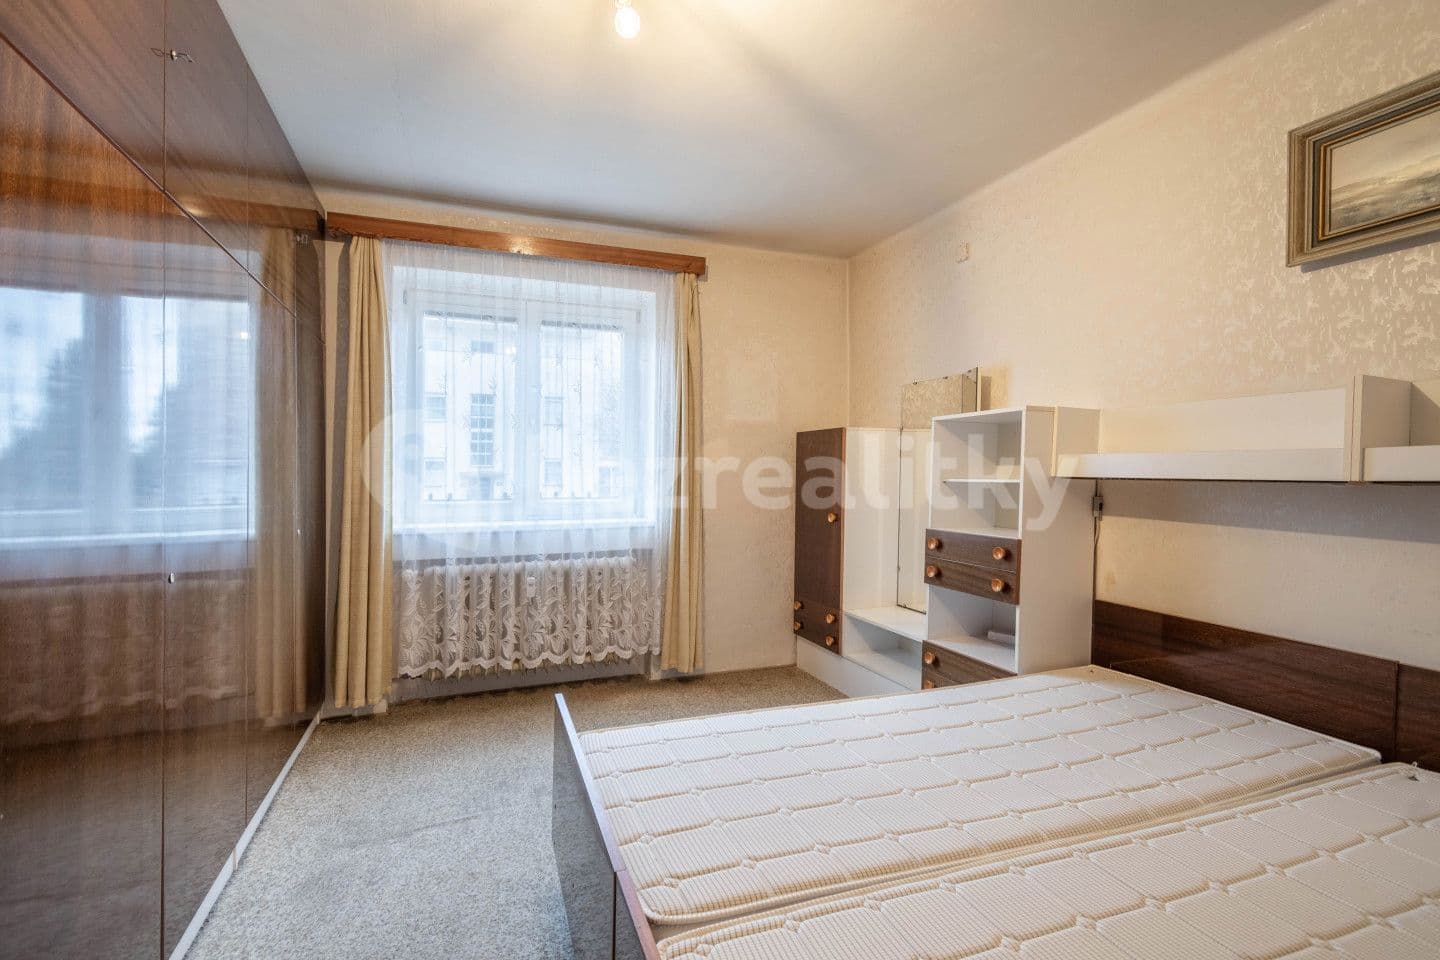 2 bedroom flat for sale, 58 m², Lumiérů, Prague, Prague